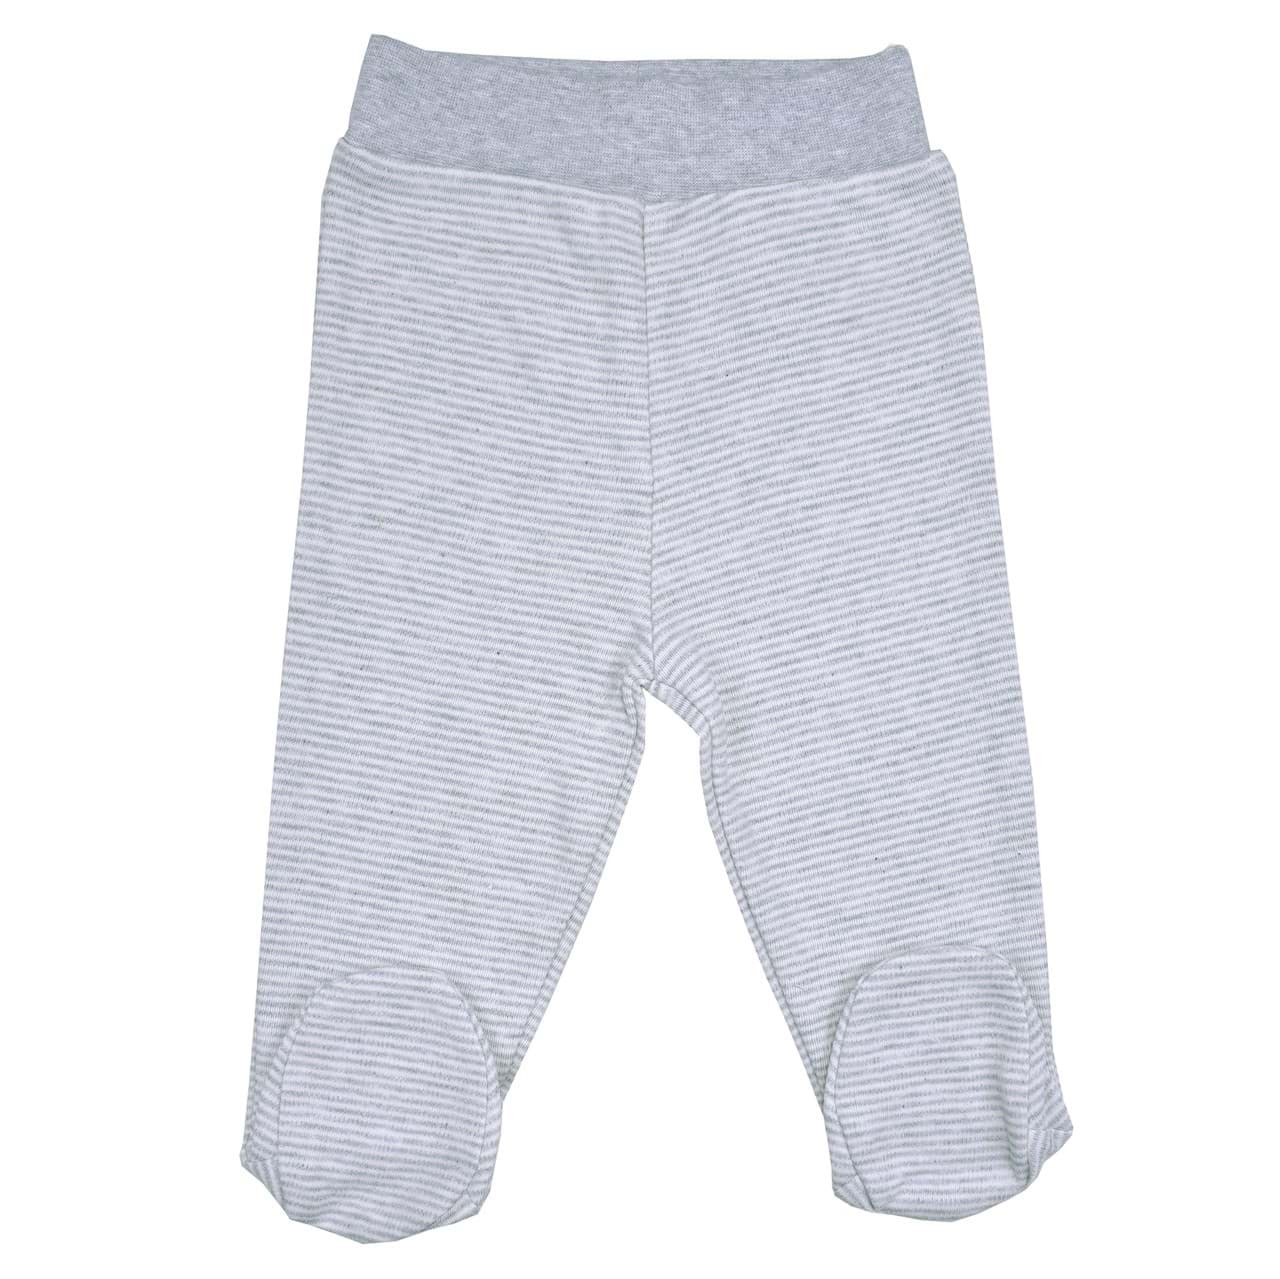 Gray Star Bebek Gri Çizgili Patikli Pantolon resmi